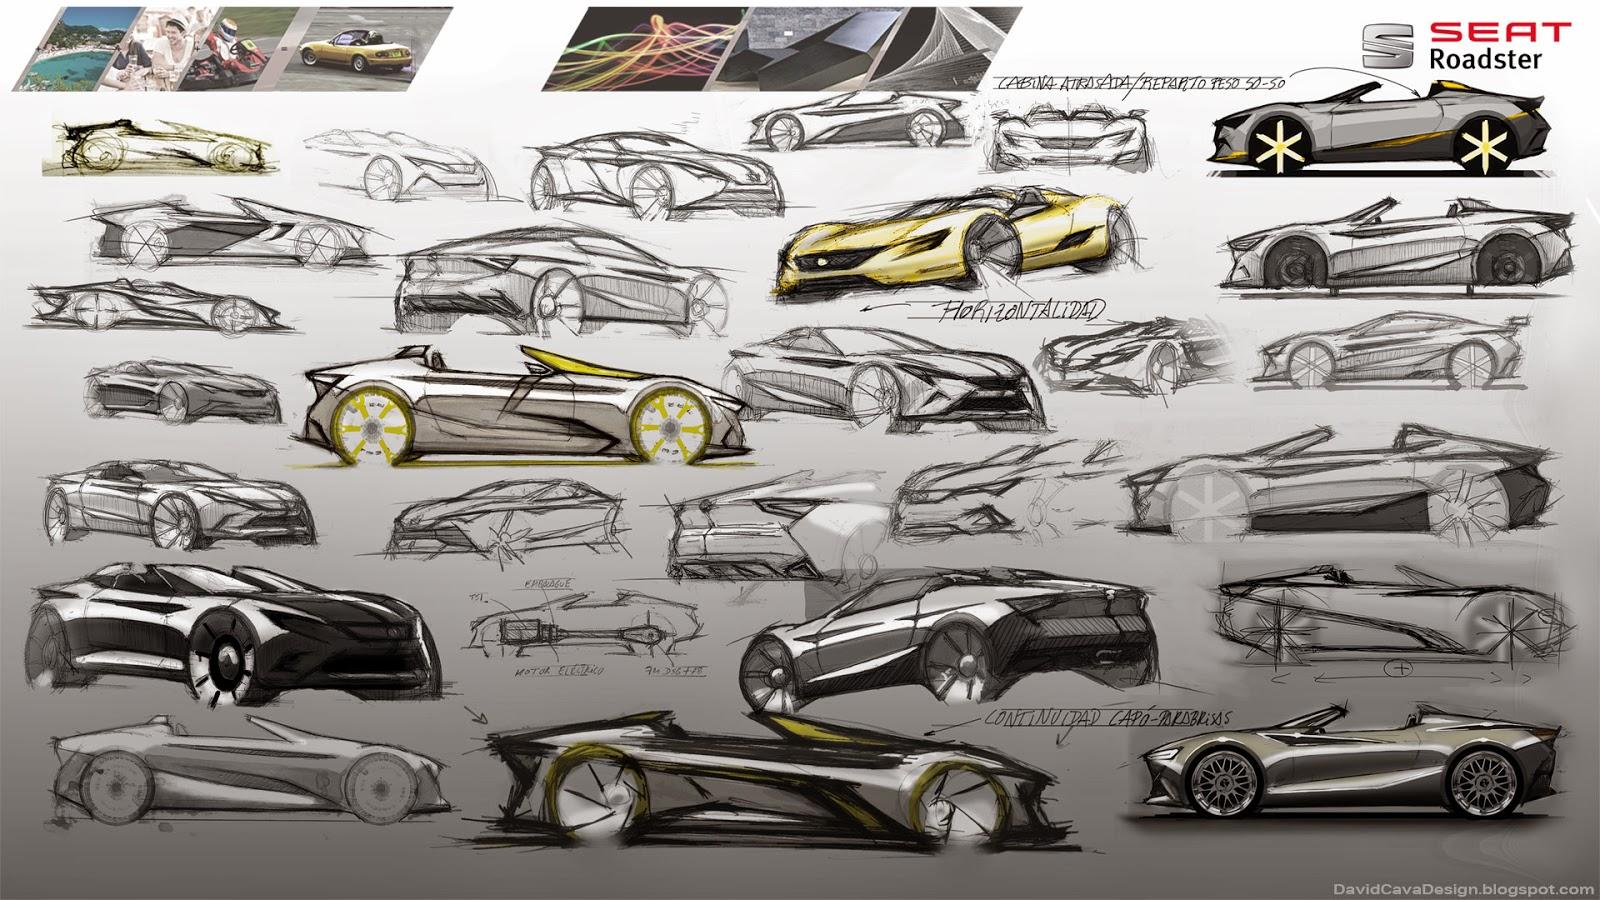 seat roadster concept renderings david cava5csp